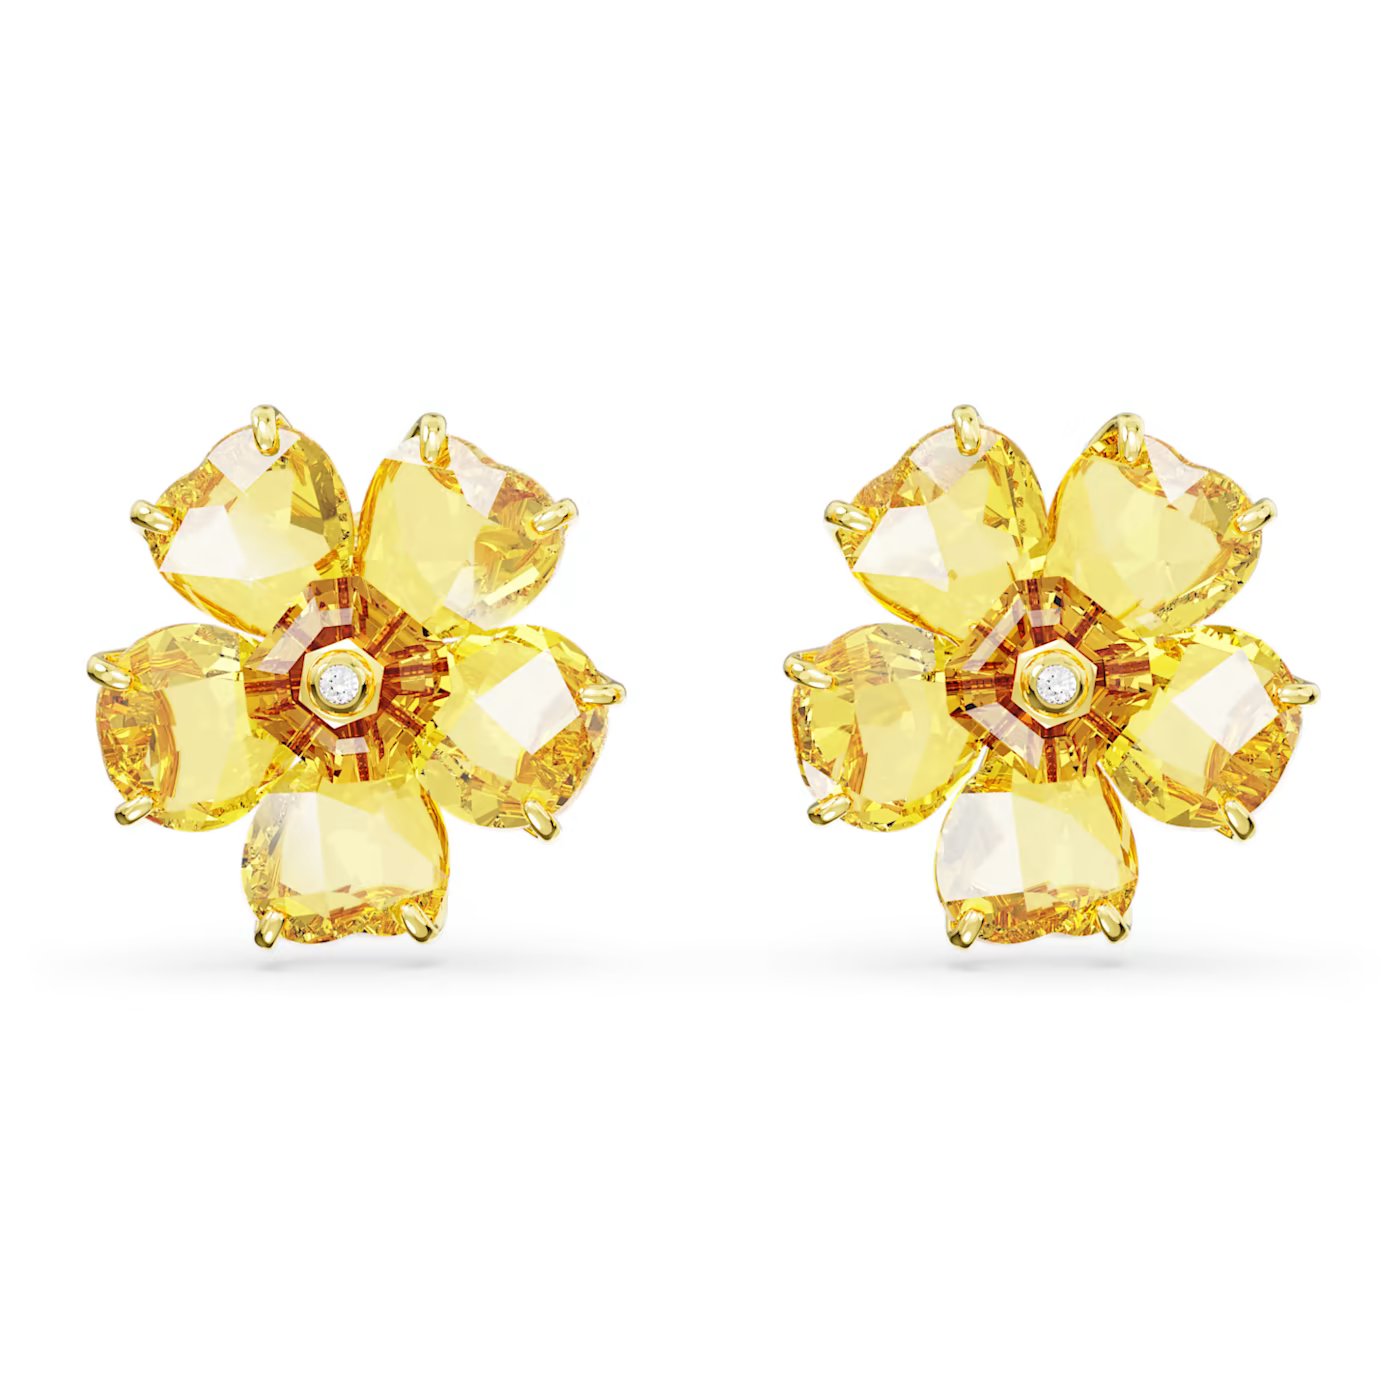 63da3bd46f9a4_florere-stud-earrings--flower--yellow--gold-tone-plated-swarovski-5650571.jpg